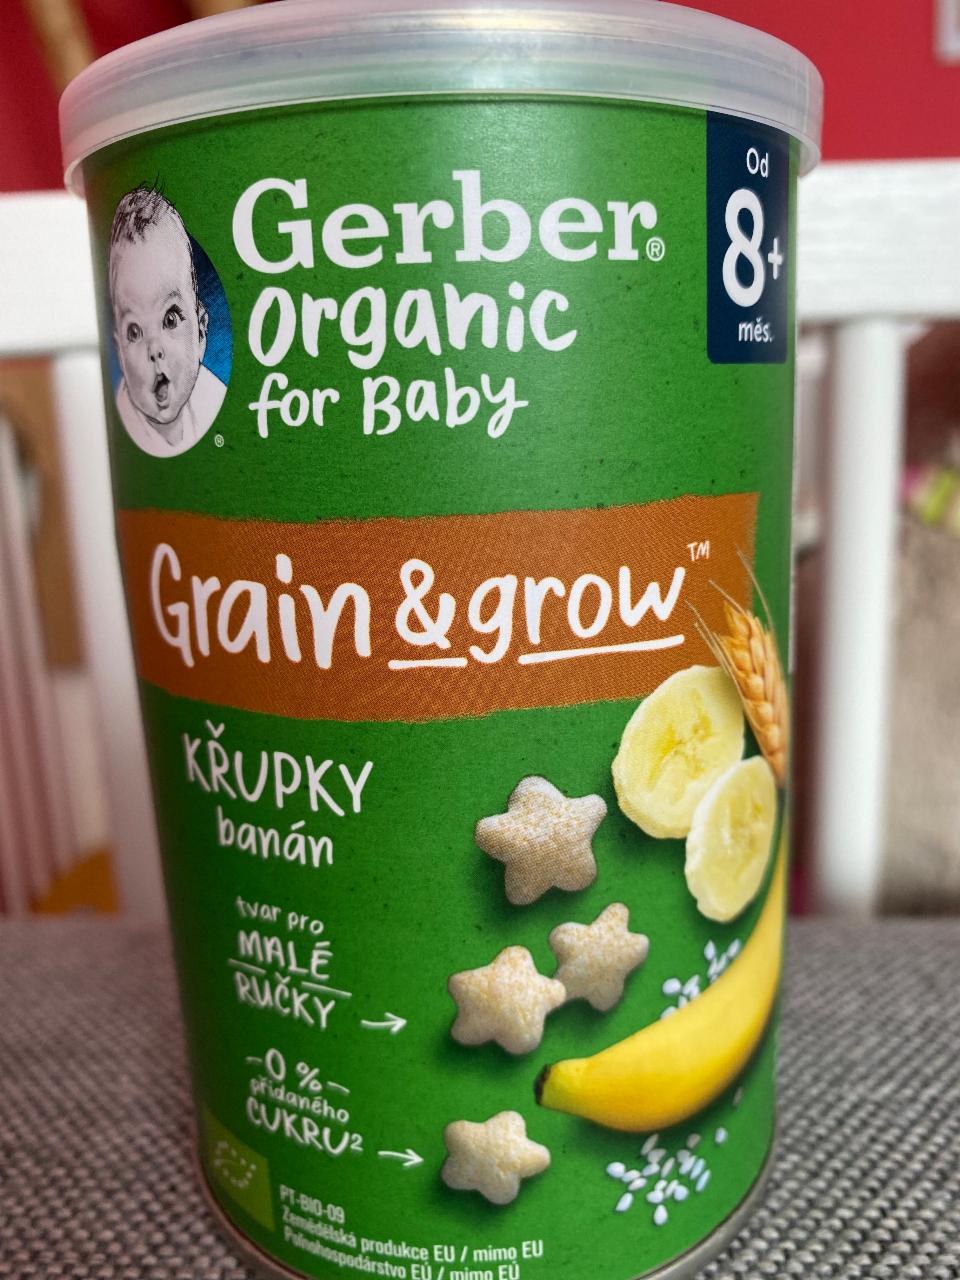 Fotografie - Grain & grow křupky banán Gerber Organic